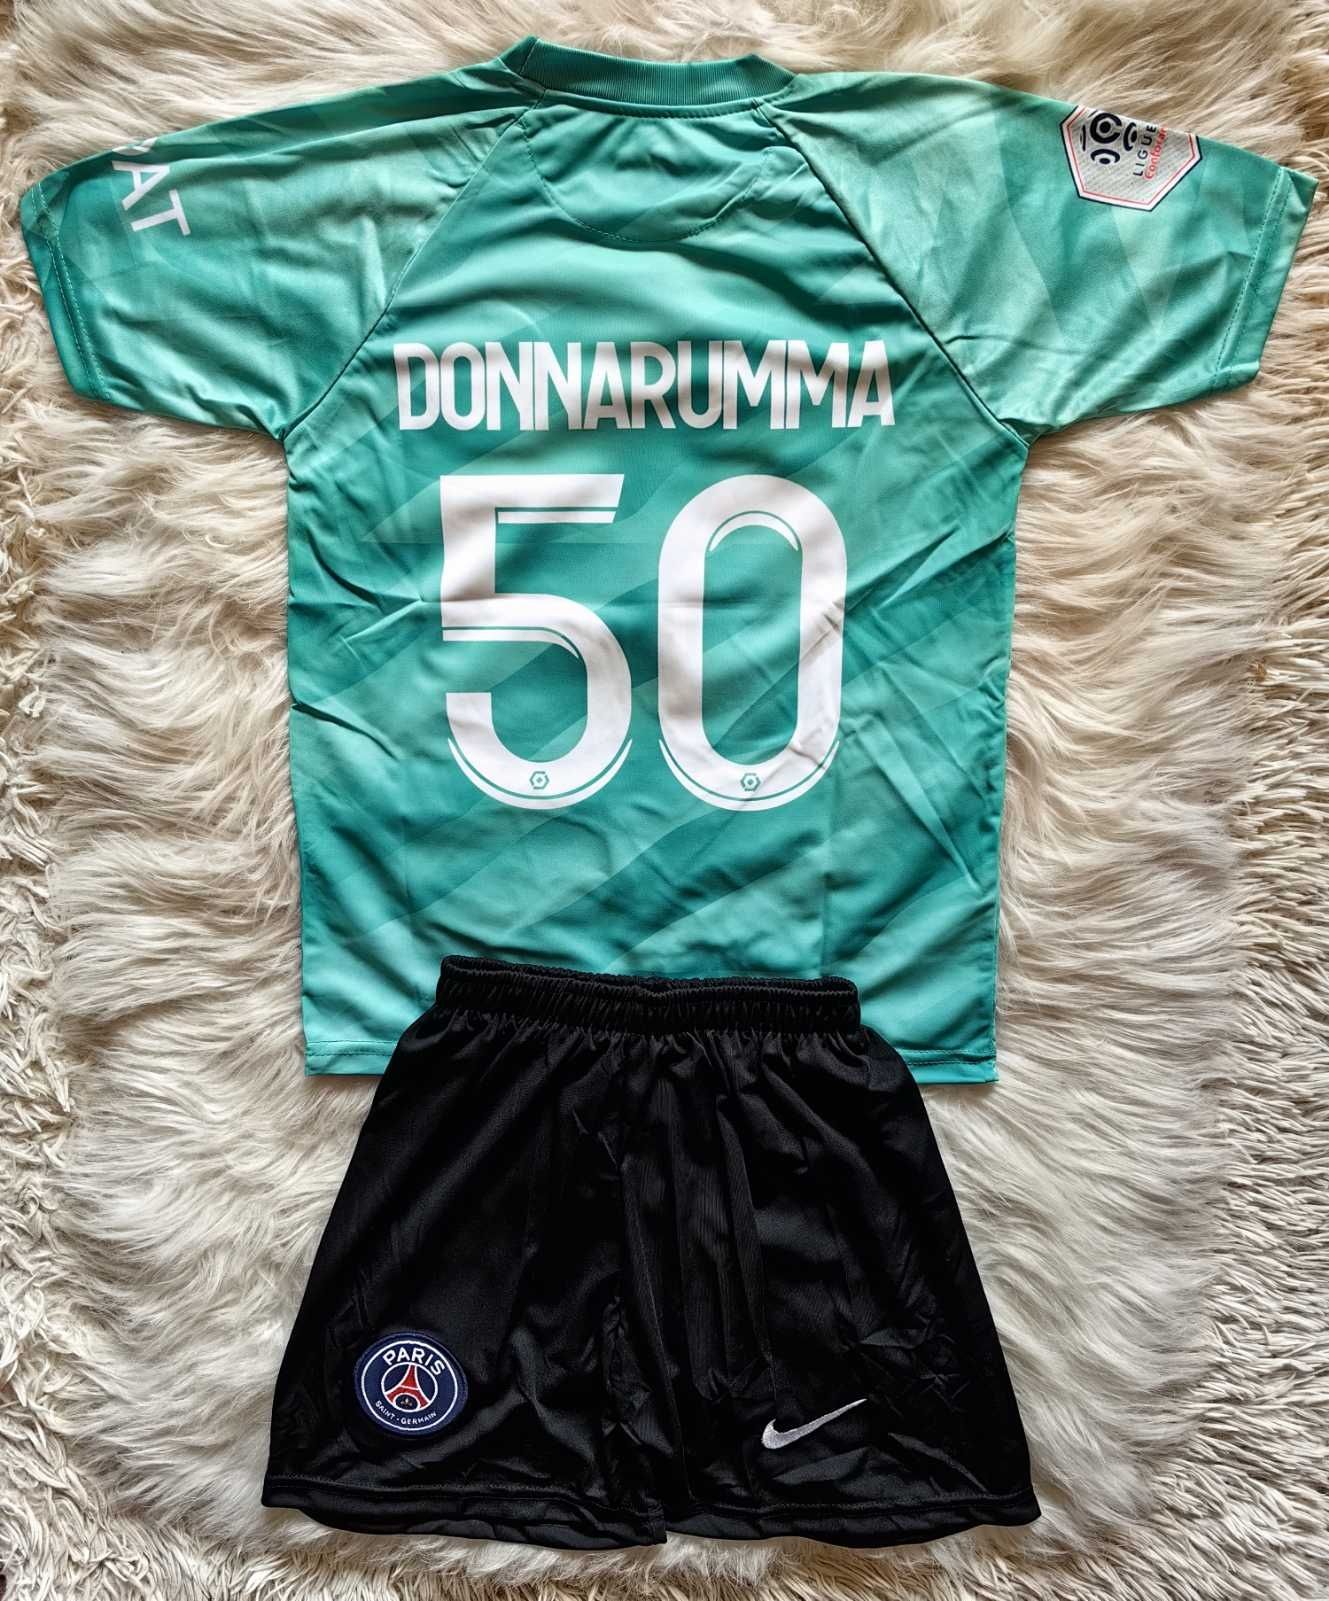 Детско - юношески вратарски футболен екип ПСЖ Донарума PSG Donnarumma